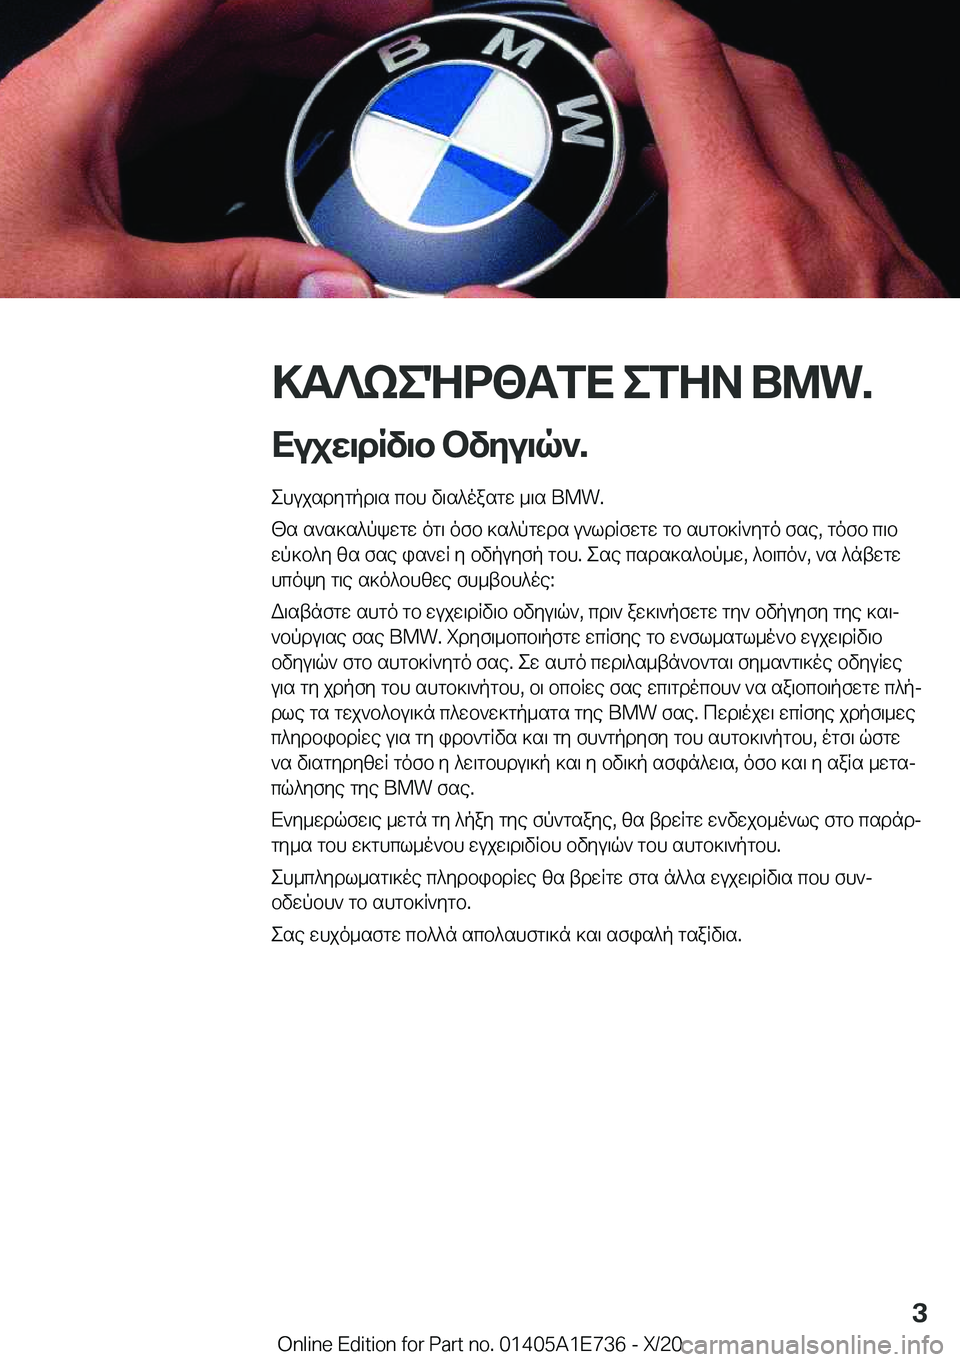 BMW X2 2021  ΟΔΗΓΌΣ ΧΡΉΣΗΣ (in Greek) >T?keNd<TfX�efZA��B�M�W�.
Xujw\dRv\b�bvyu\q`�. ehujsdygpd\s�cbh�v\s^oasgw�_\s��B�M�W�.
<s�s`s]s^pkwgw�og\�ofb�